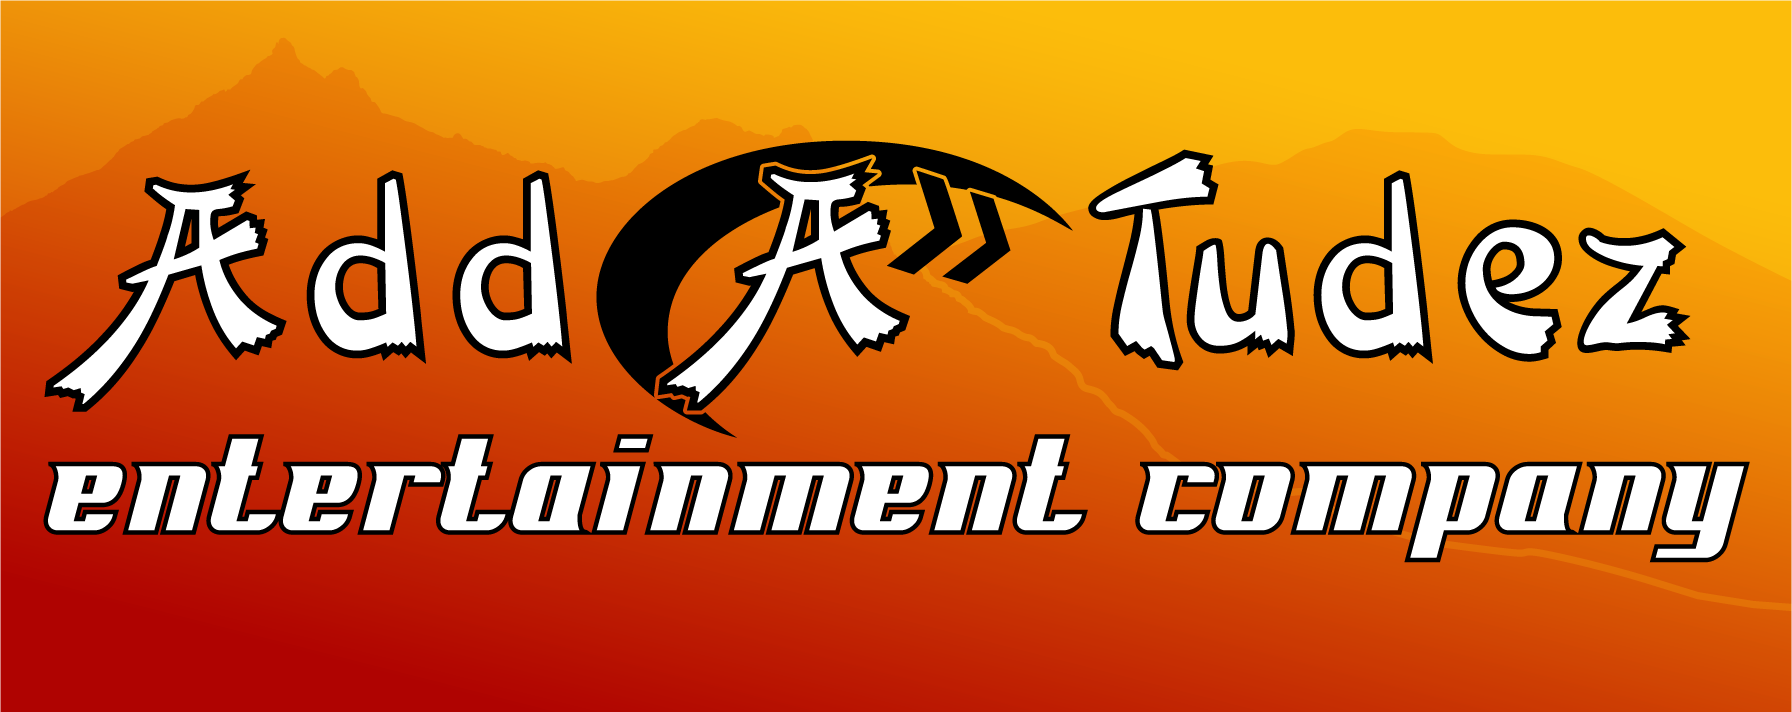 Add-A-Tudez Entertainment Company logo